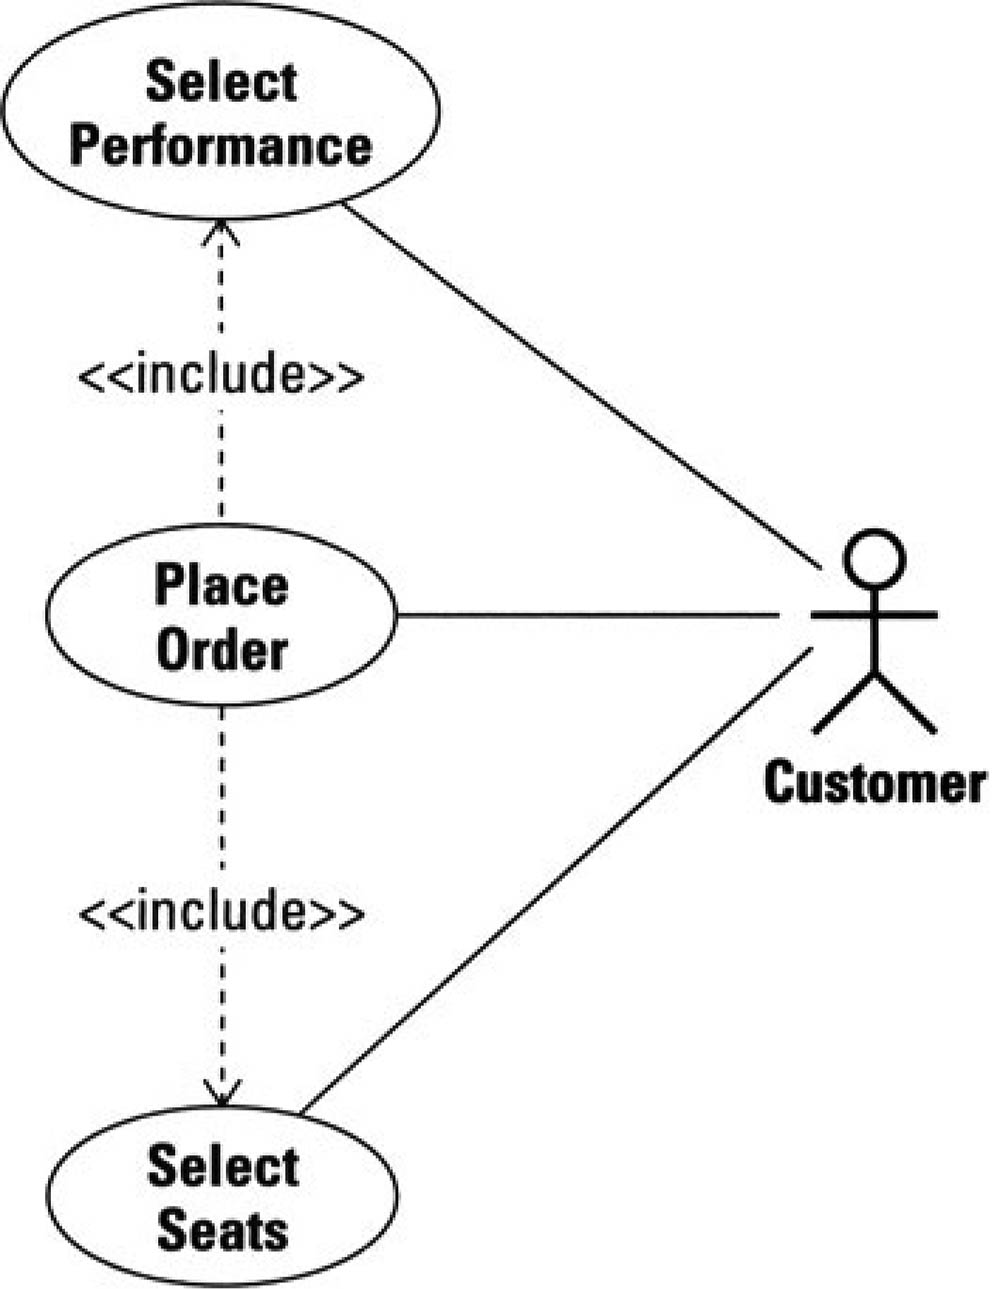 Use Case diagram example